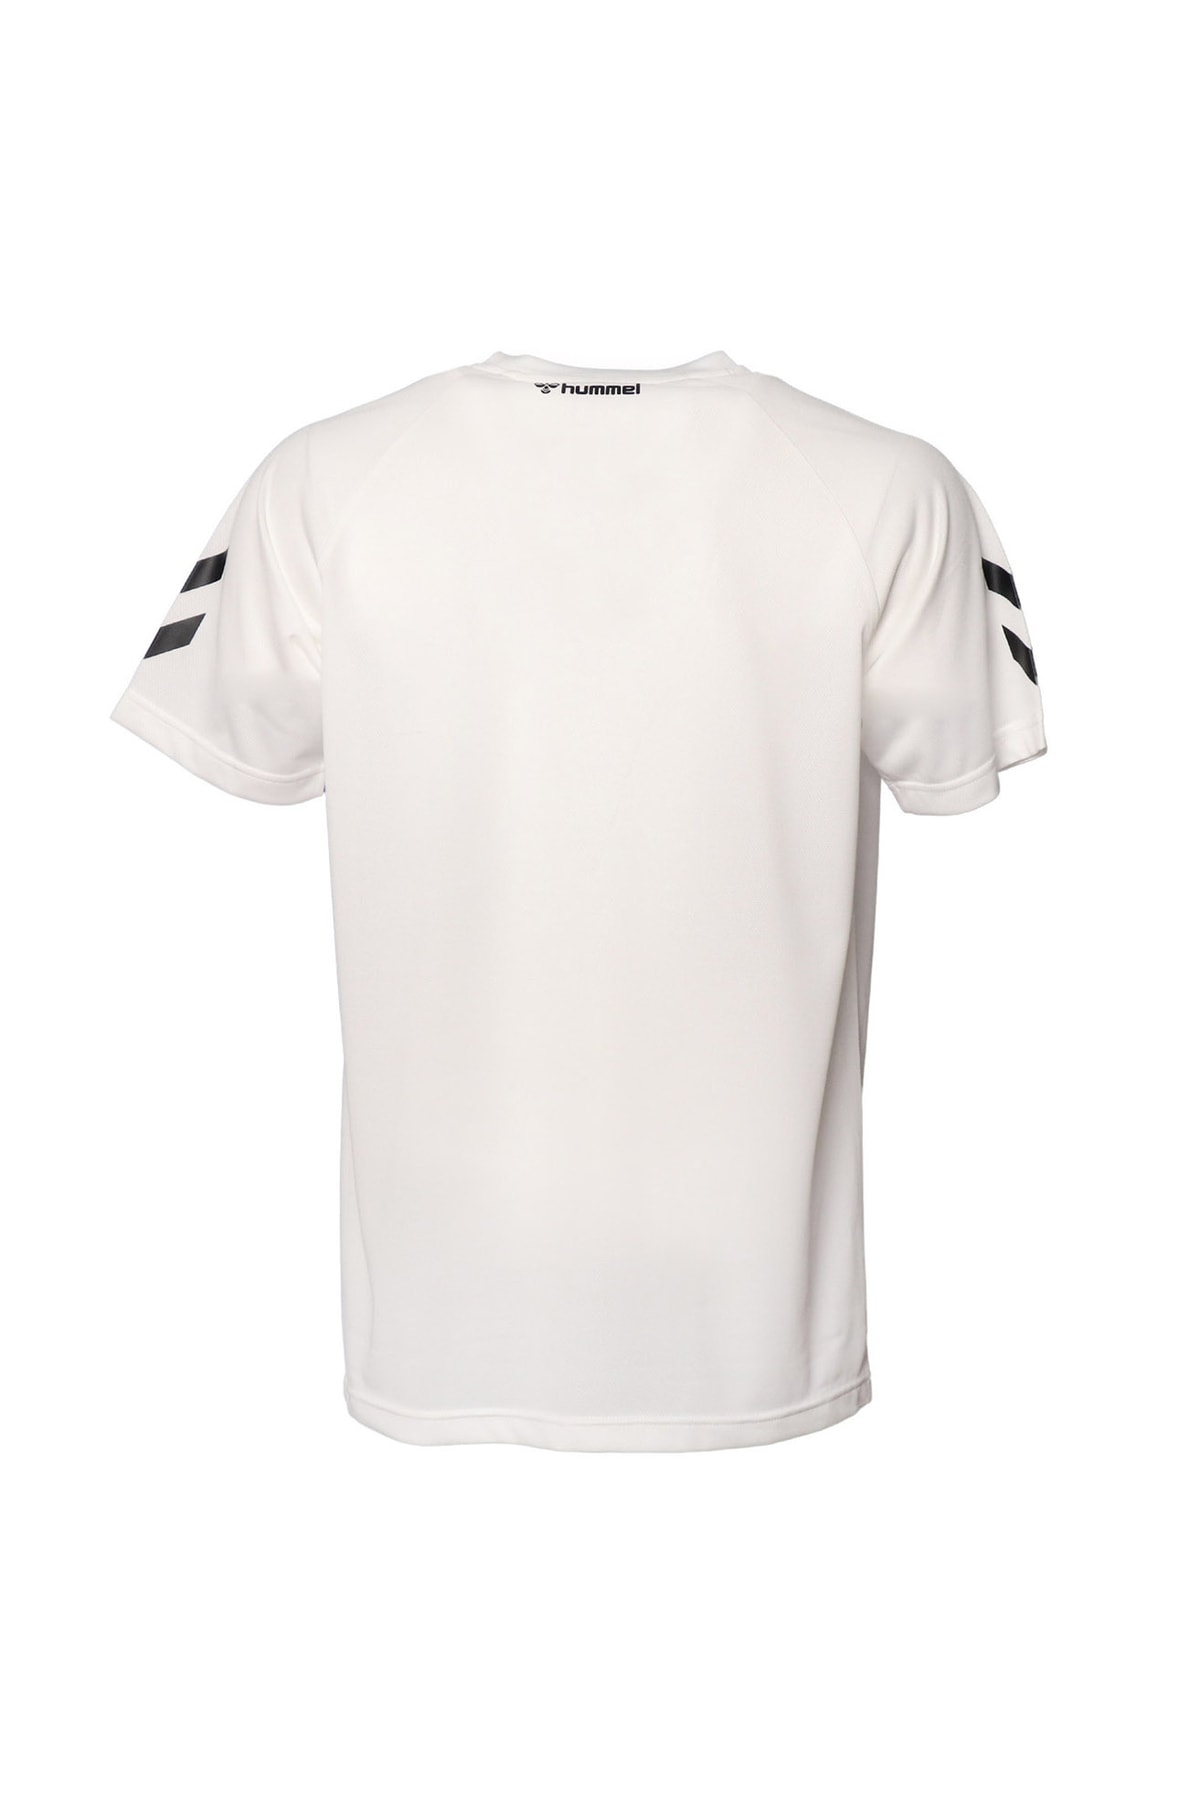 HUMMEL تی شرت مردانه با چاپ یقه مایل به سفید Hmlt-mt پاپیون M